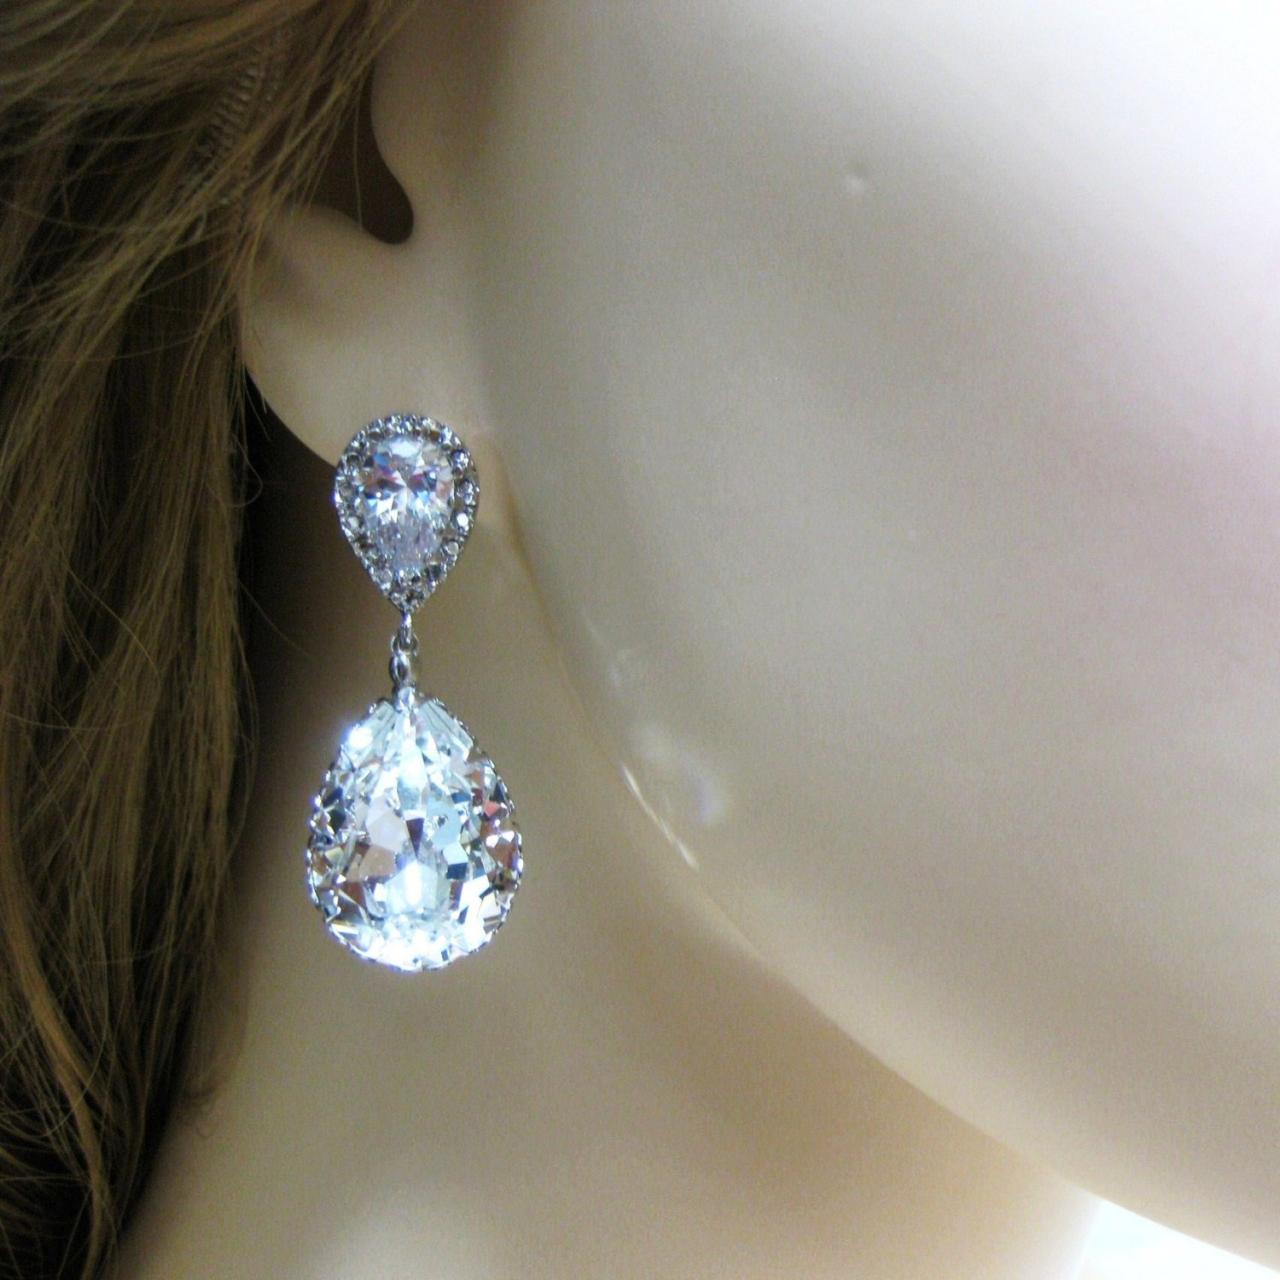 Bridal Crystal Earrings Wedding Jewelry Swarovski Crystal Teardrop Earring Wedding Jewelry Bridesmaid Gift Long Bridal Earrings (e008)